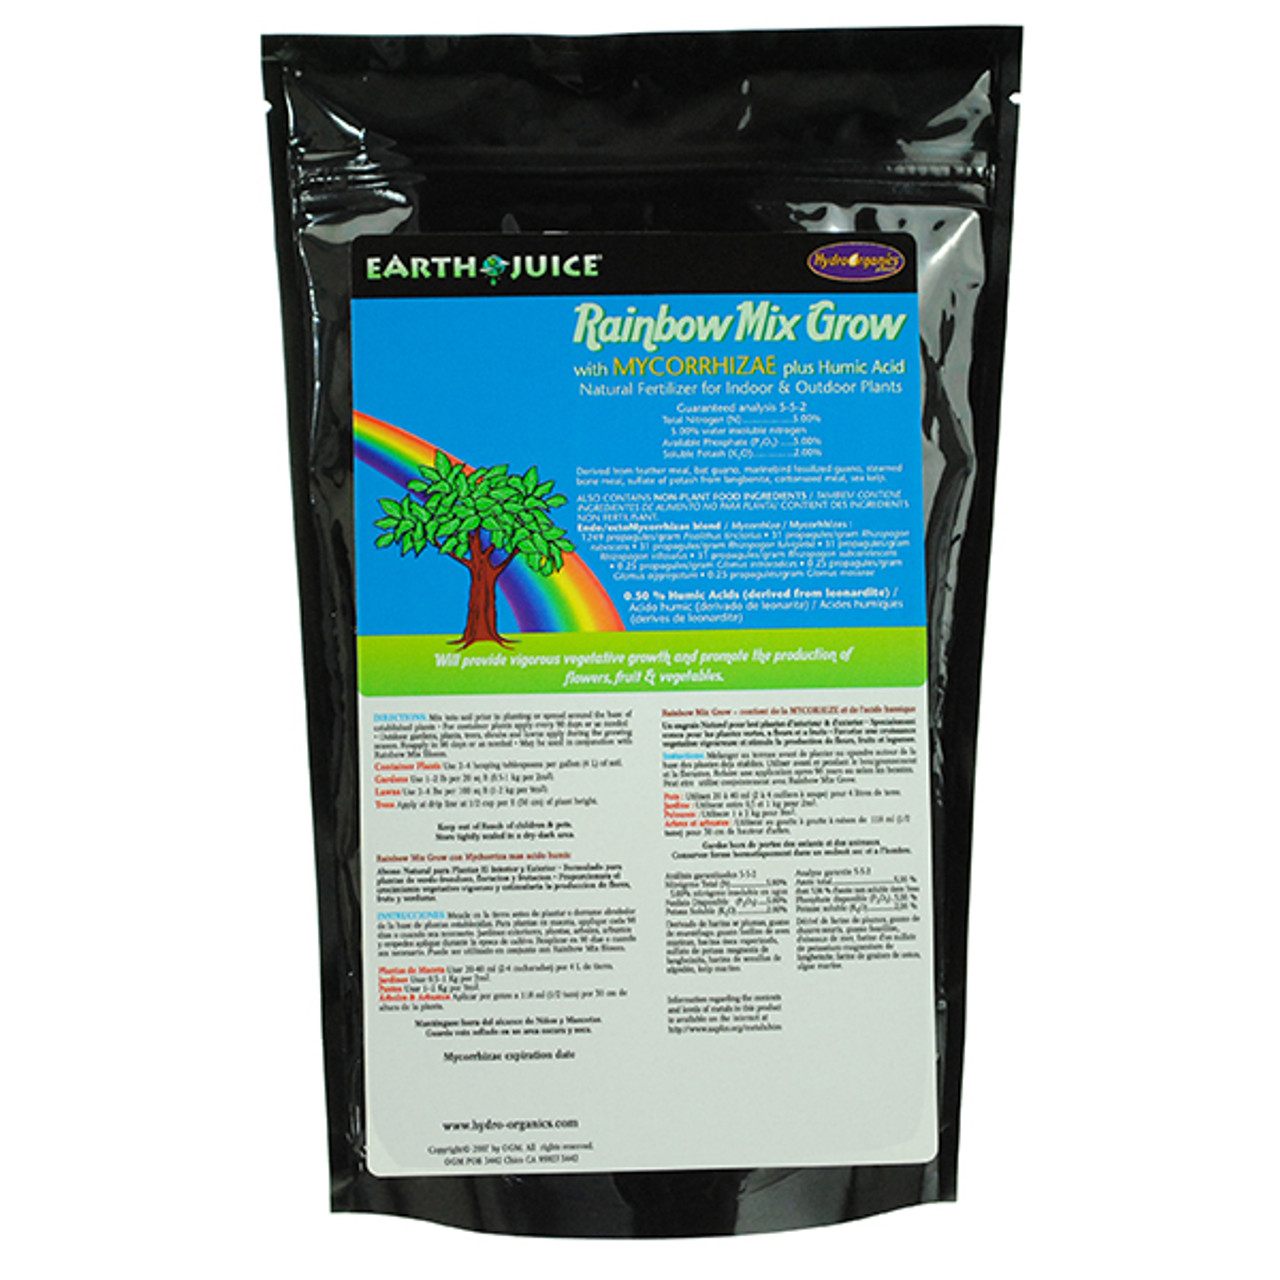 Earth Juice Rainbow Mix Grow (Original Formula) 5 lb